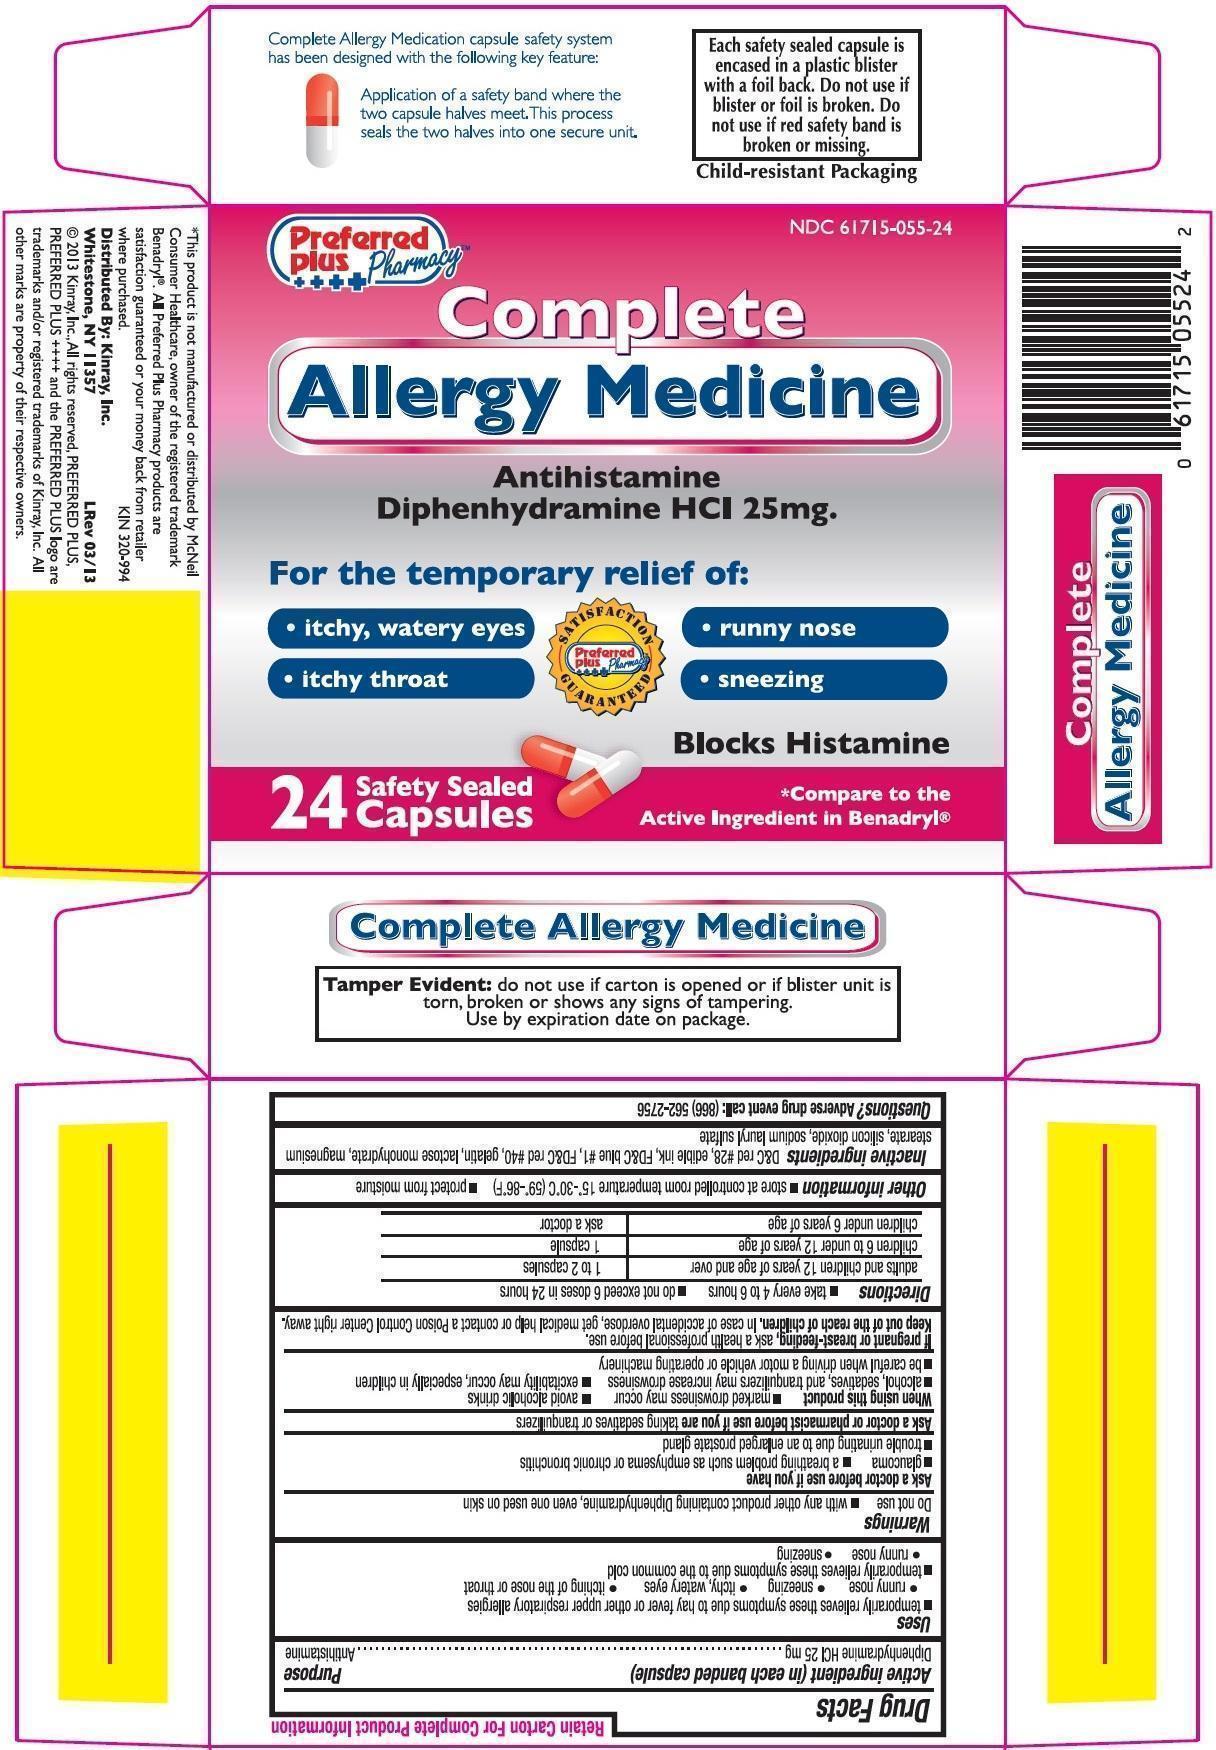 Preferred Plus Complete Allergy Medicine | Diphenhydramine Hydrochloride Capsule while Breastfeeding